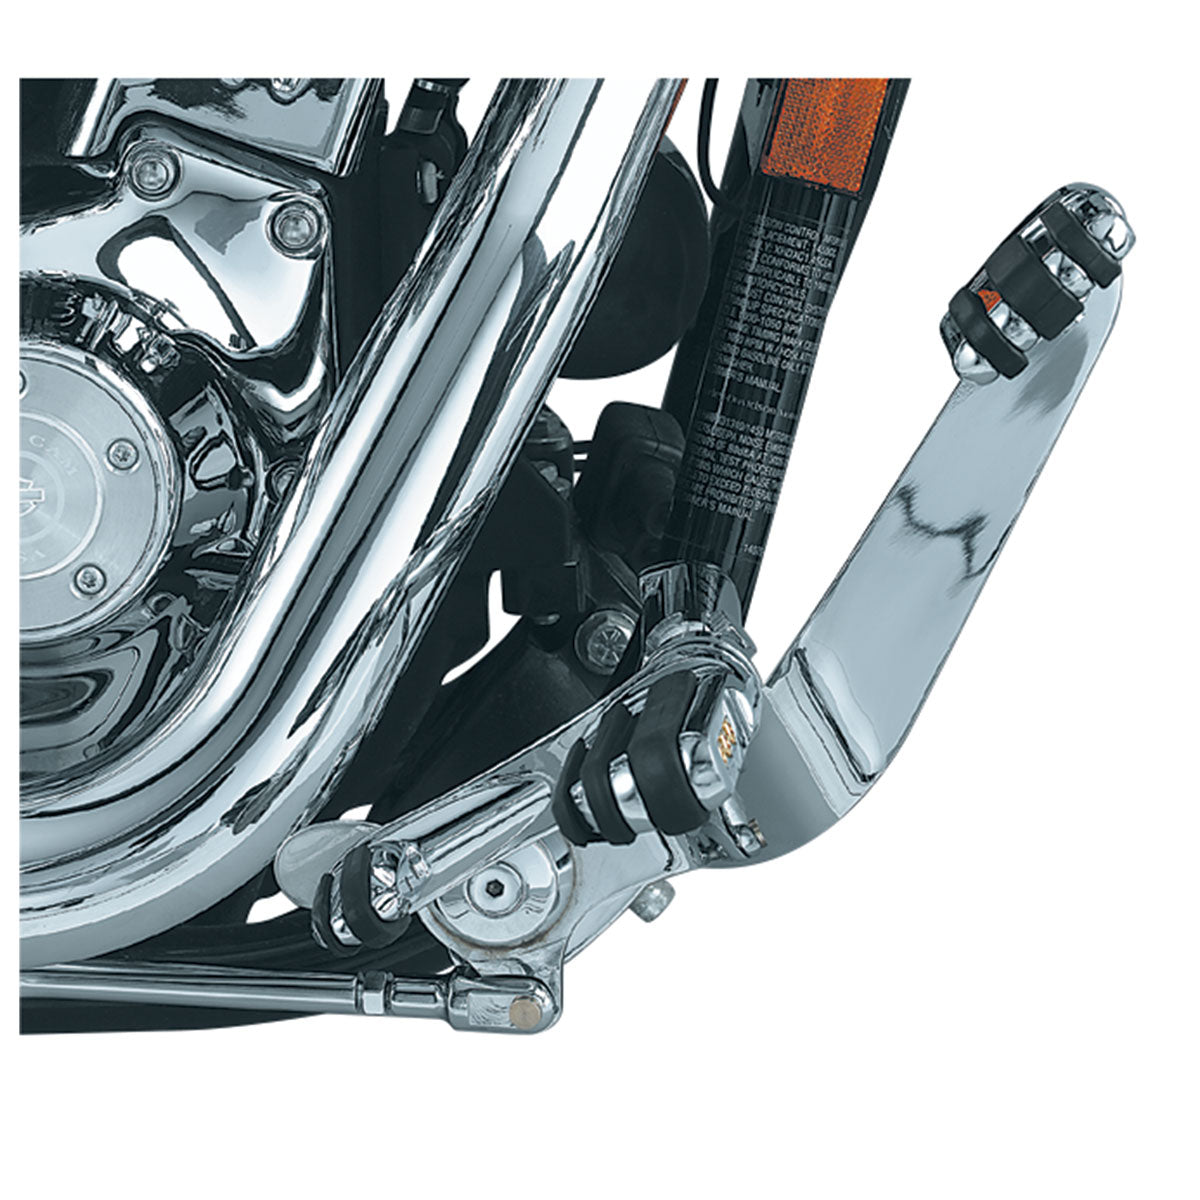 Second Generation Harley-Davidson Forward Controls